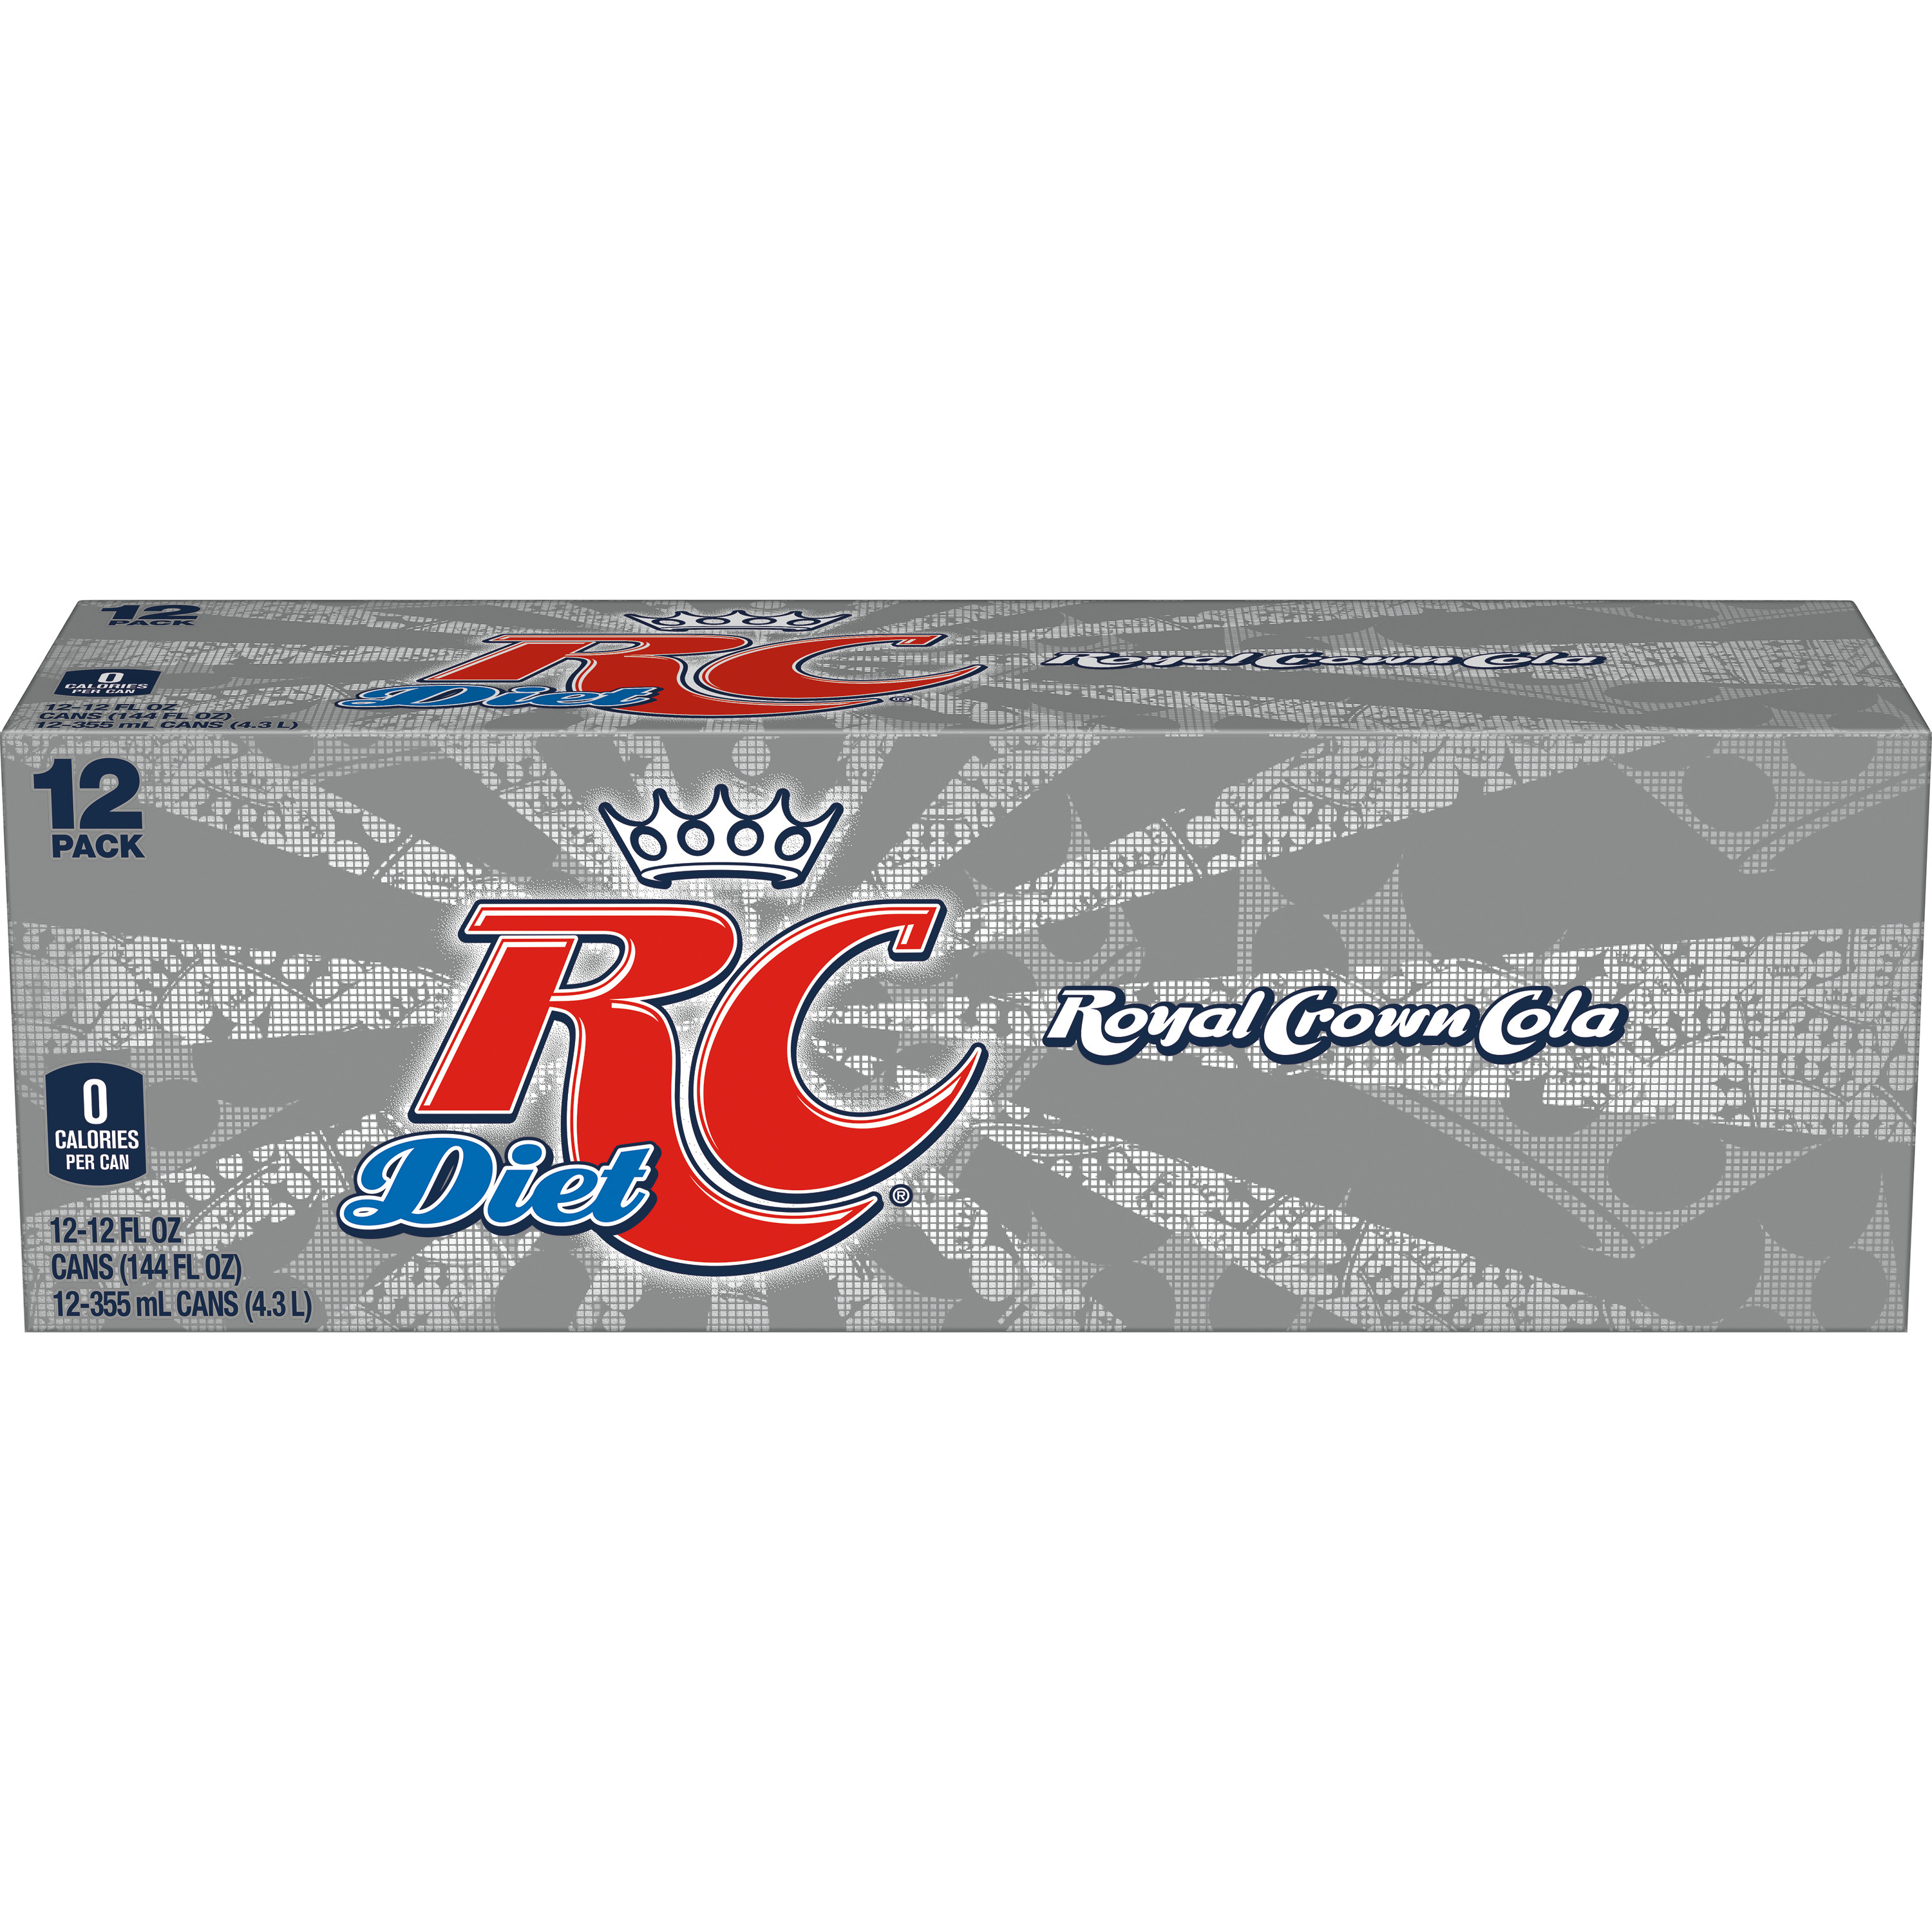 Diet RC Cola Soda Pop, 12 fl oz, 12 Pack Cans - image 5 of 10